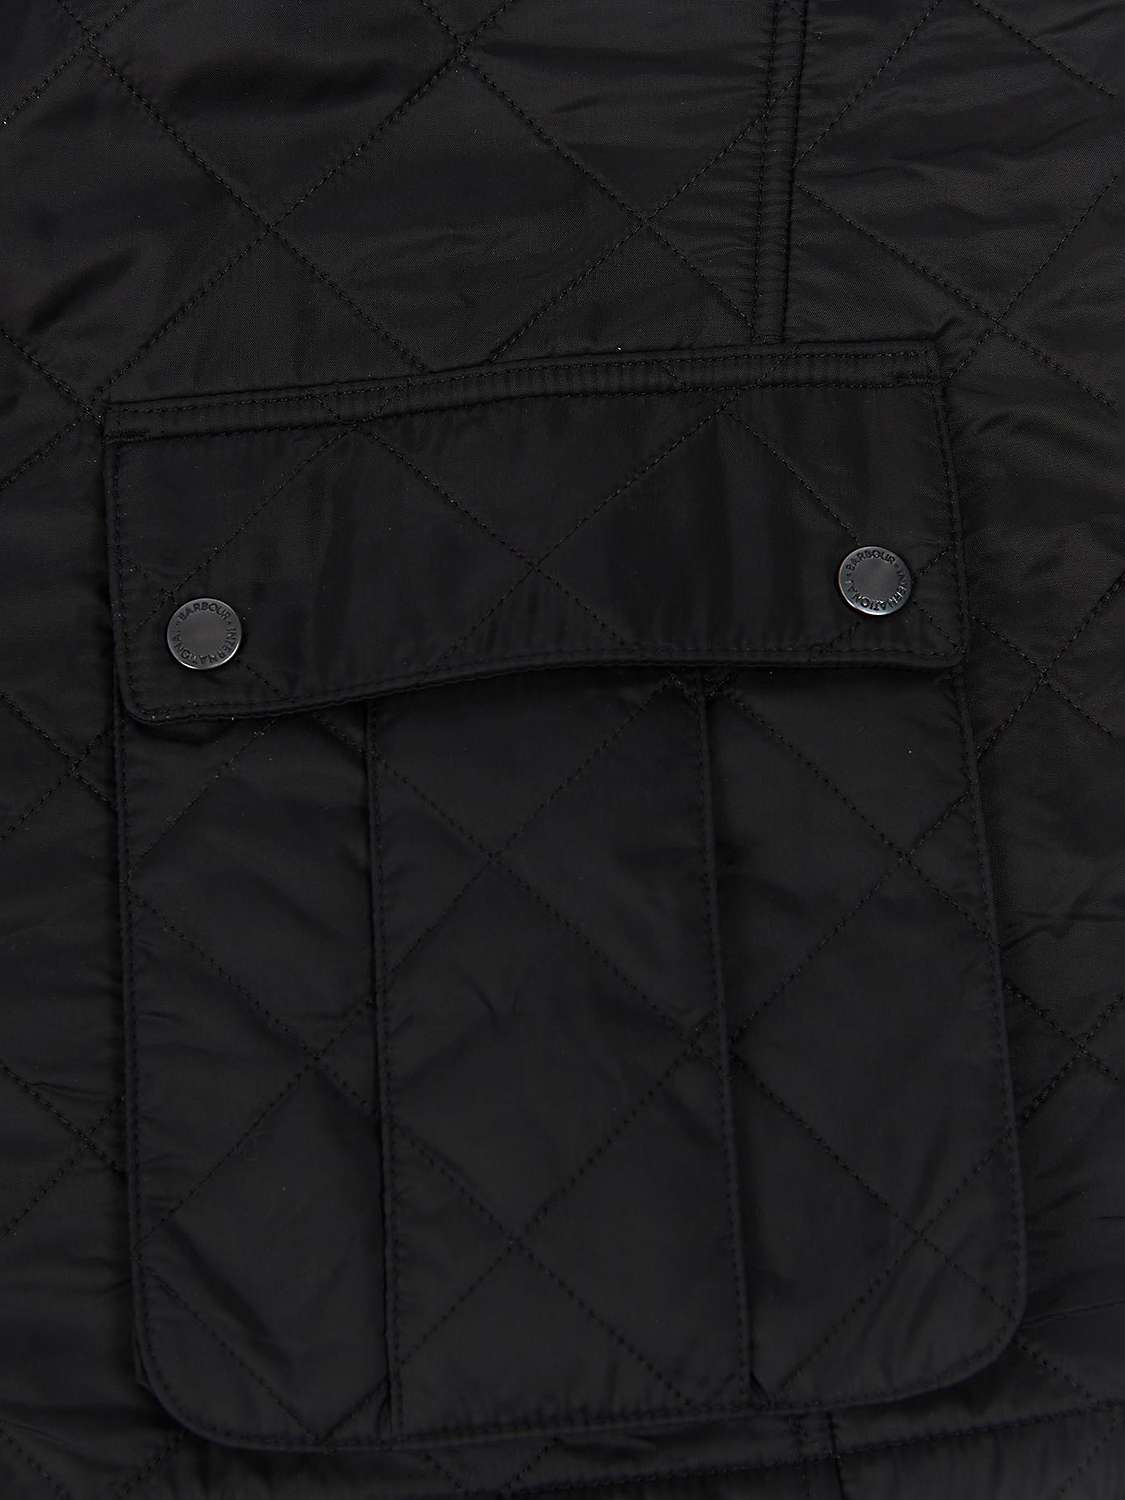 Buy Barbour International Ariel Polar Quilted Jacket, Black Online at johnlewis.com